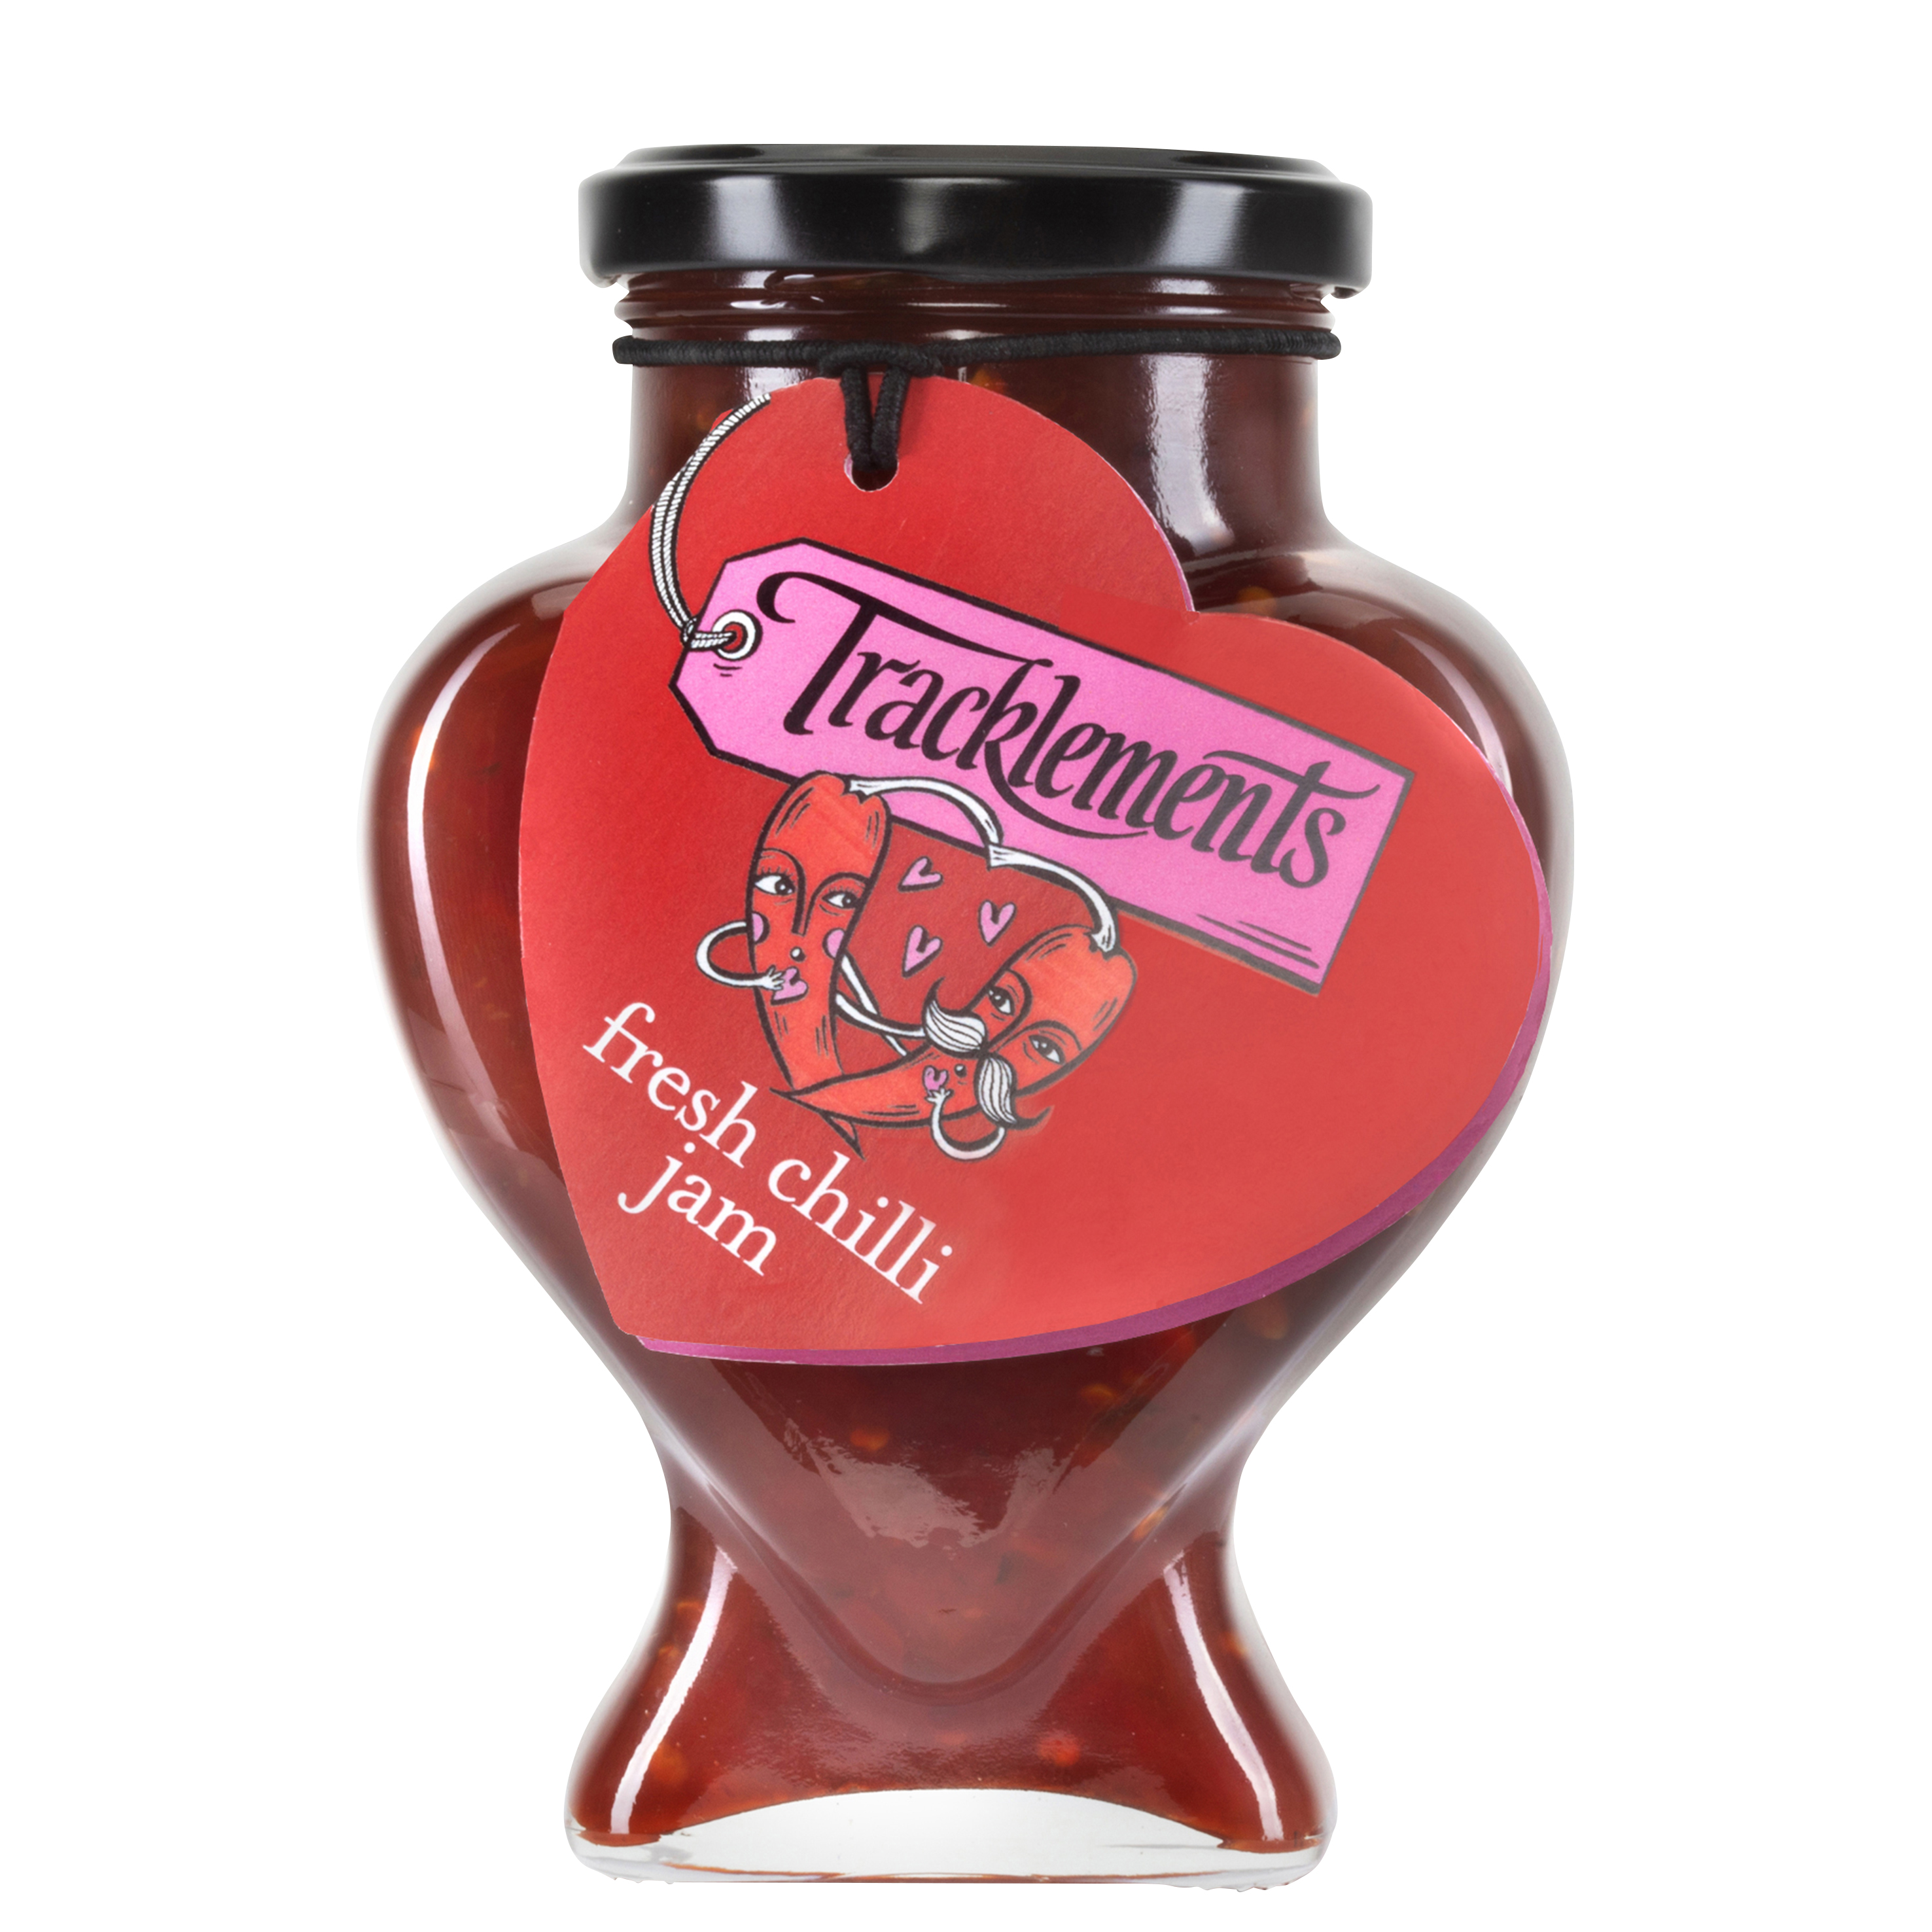 Jam Chilli Heart-Shaped Gifting Jar